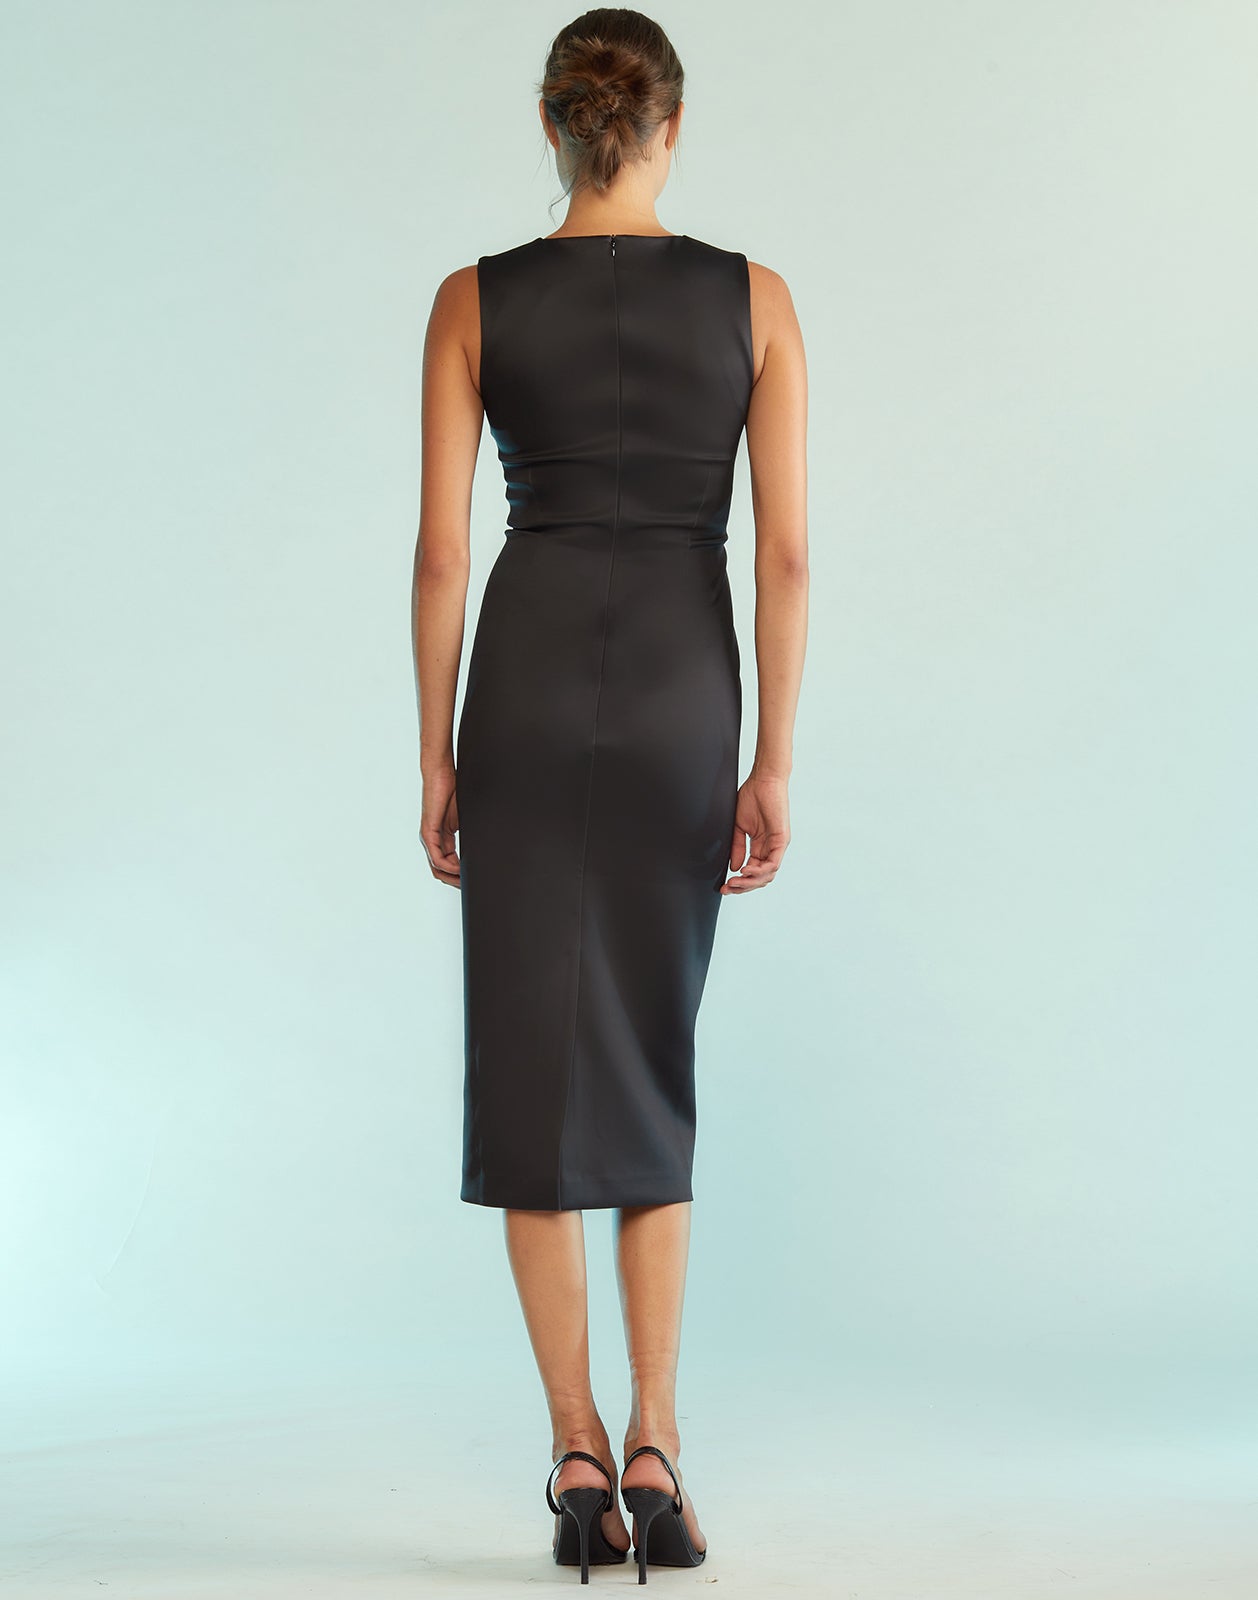 The Seamless Dress – Cynthia Rowley